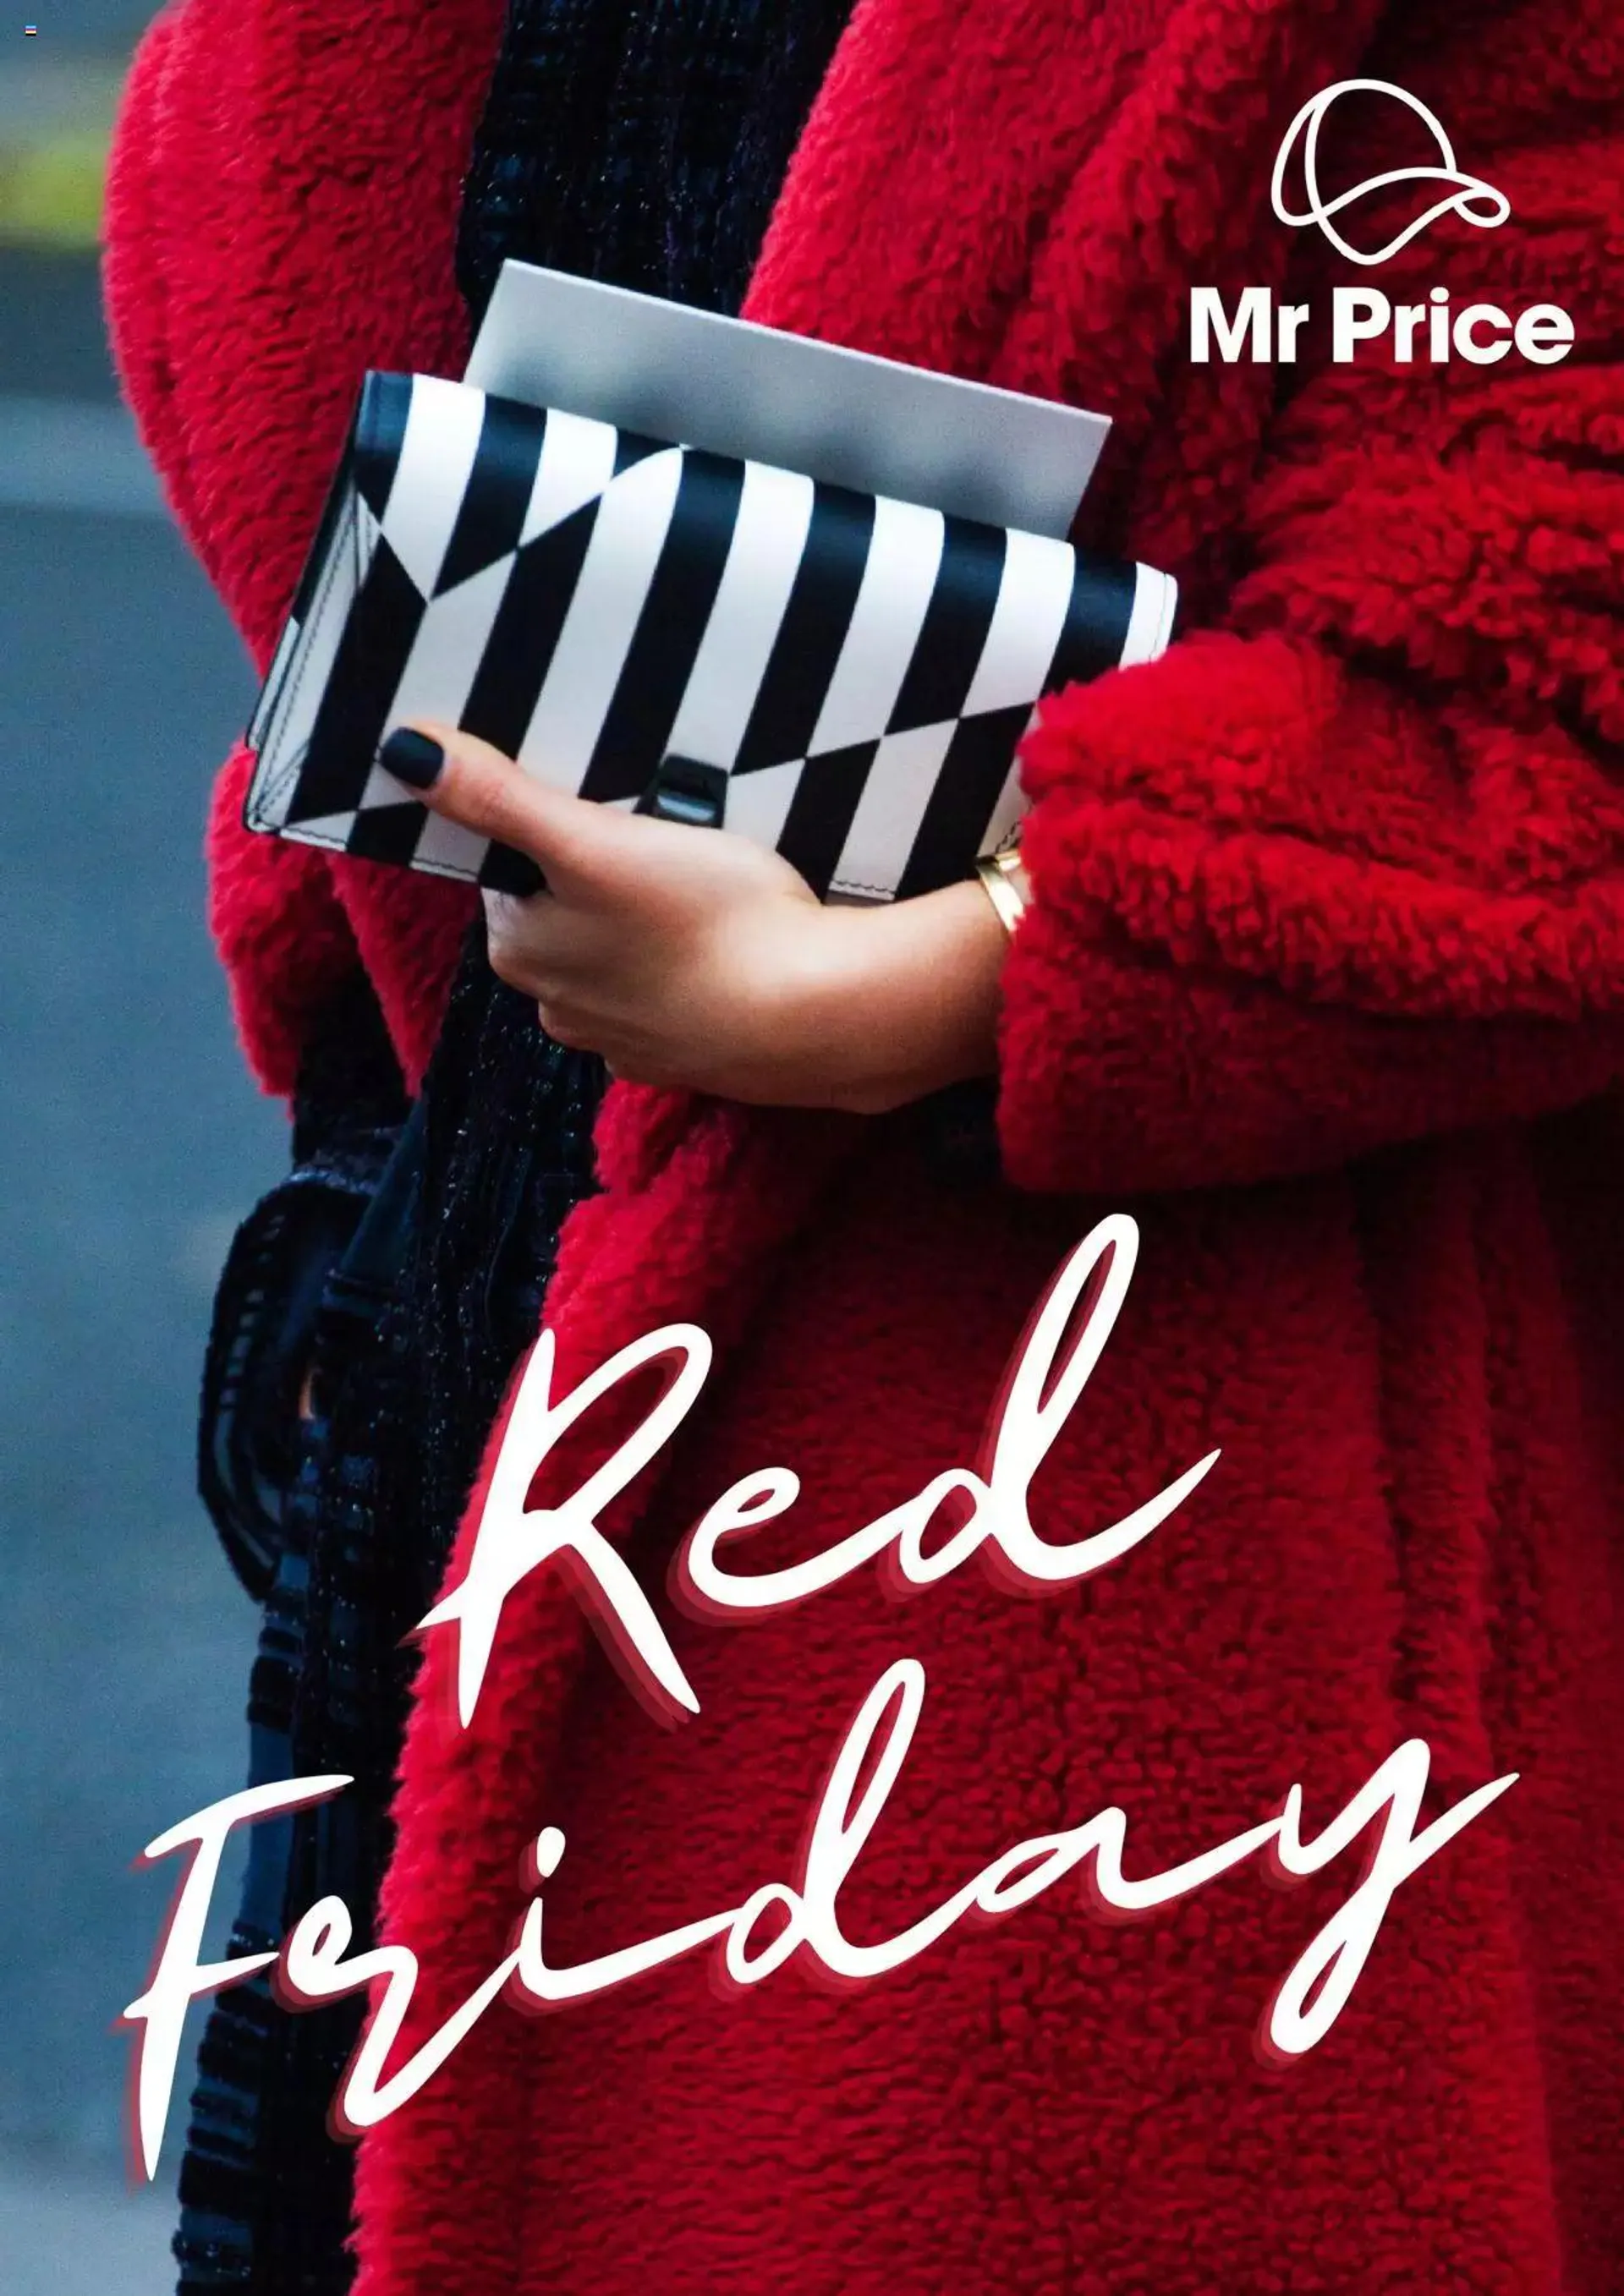 Mr Price - Red Friday